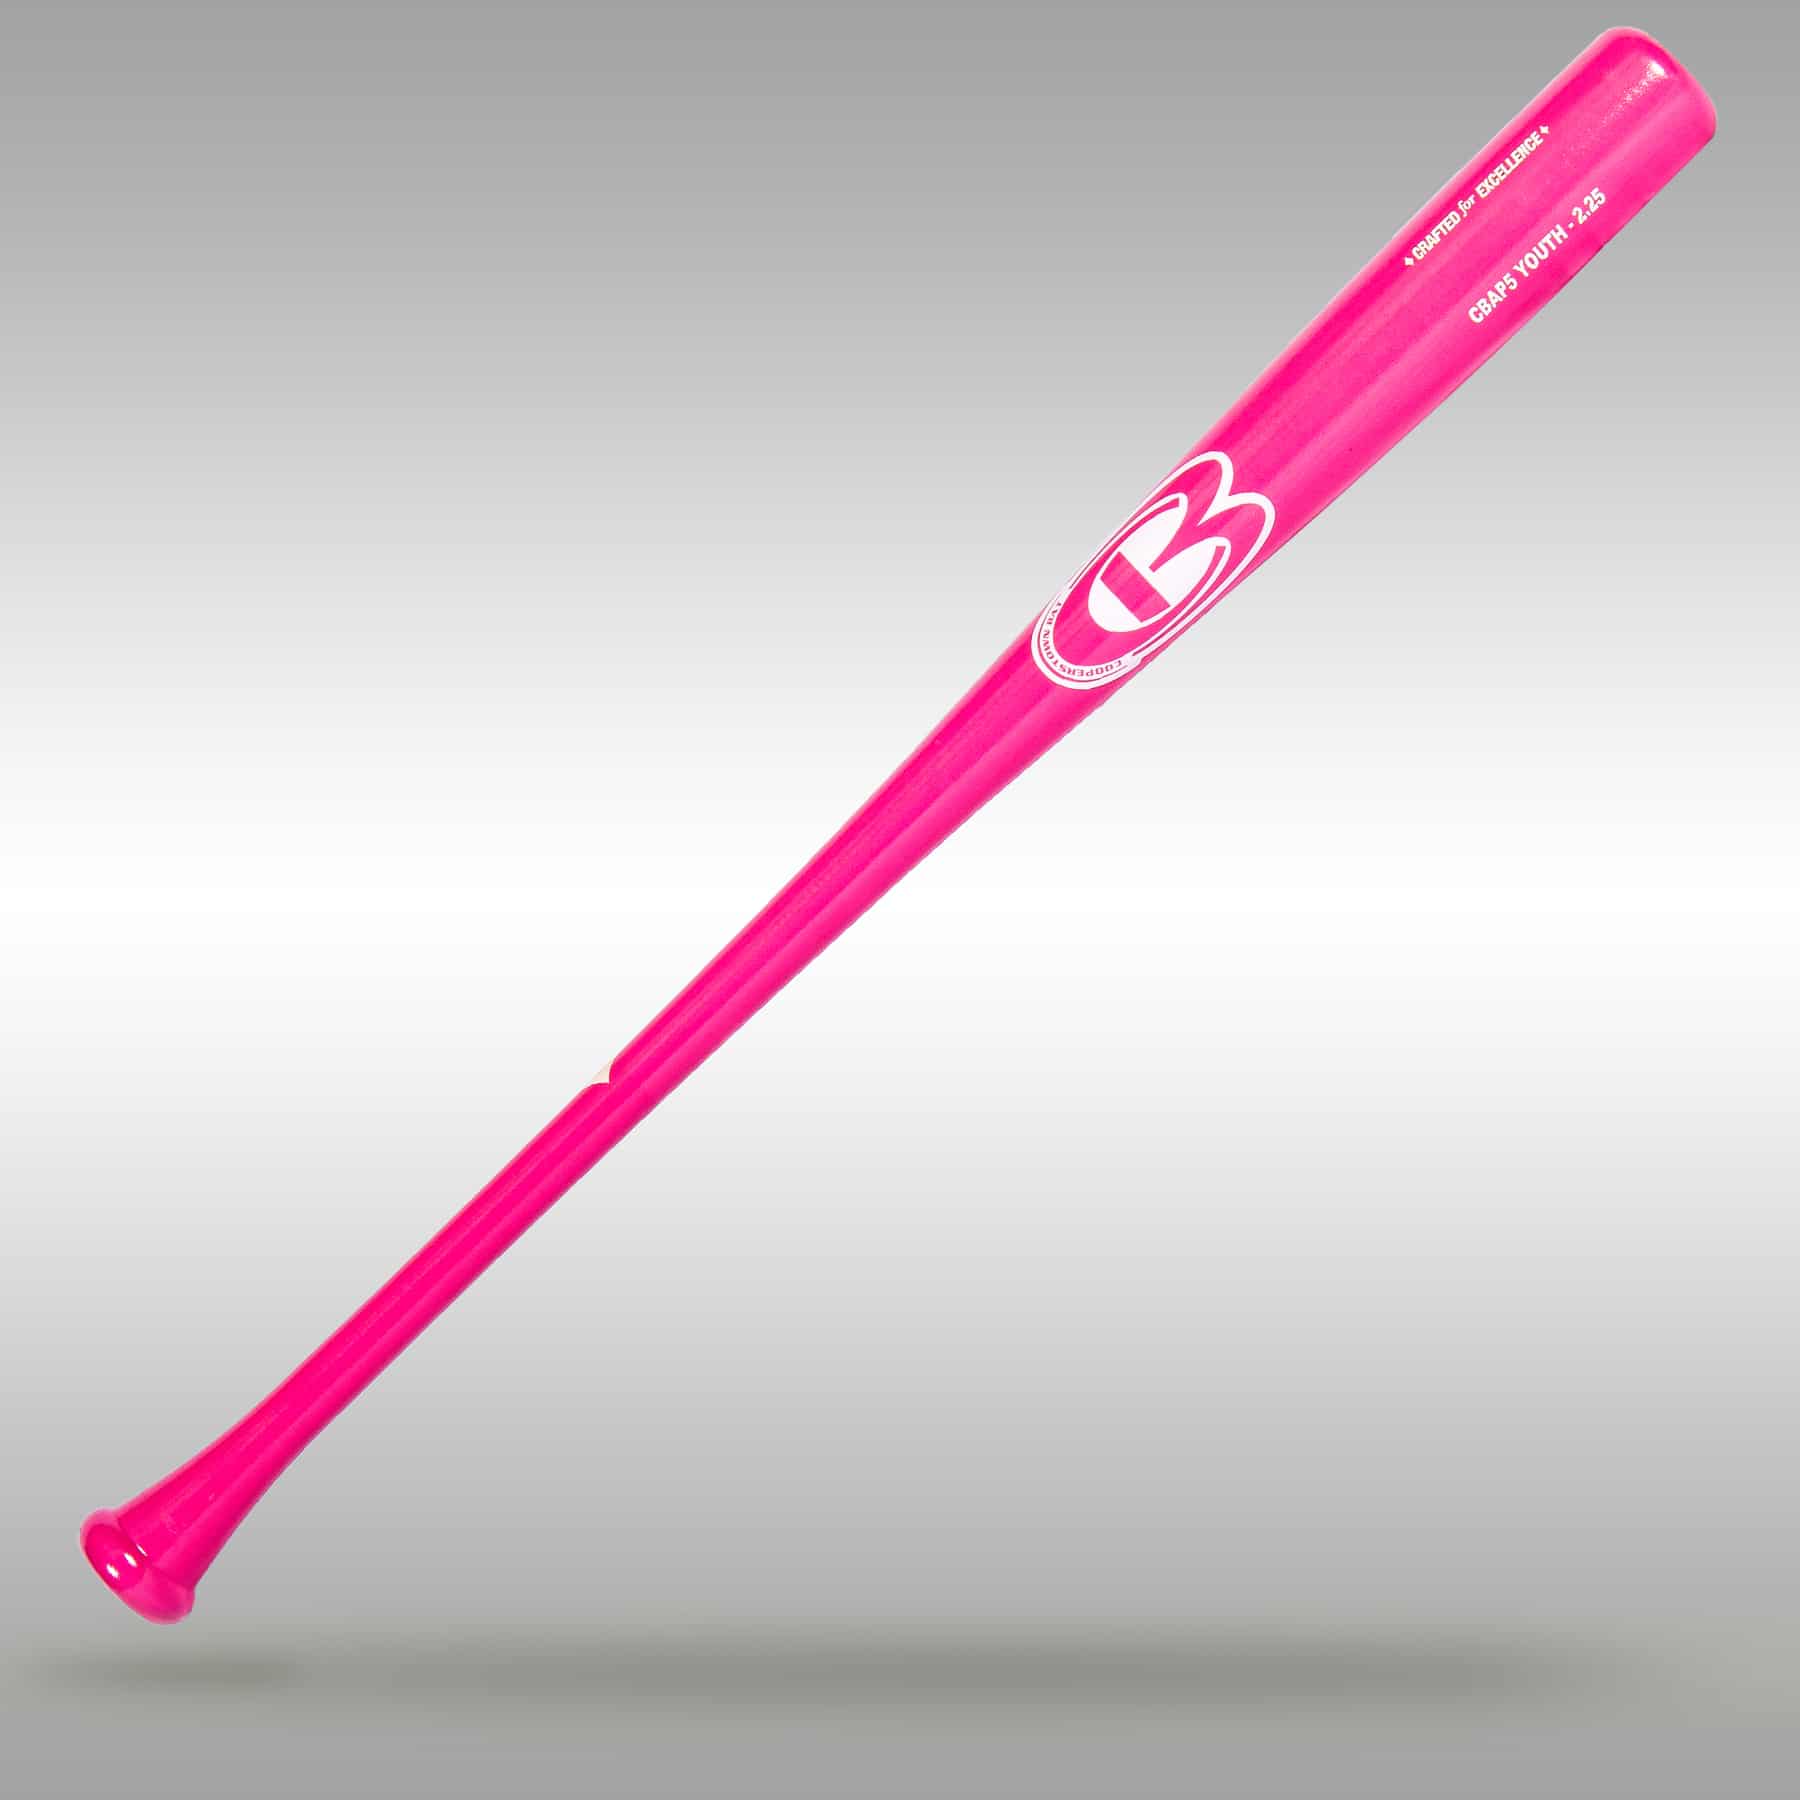 maart Chaise longue Herenhuis CBAP5 Youth Pro 2.25 Wood Baseball Bat- Pink - Cooperstown Bat Company